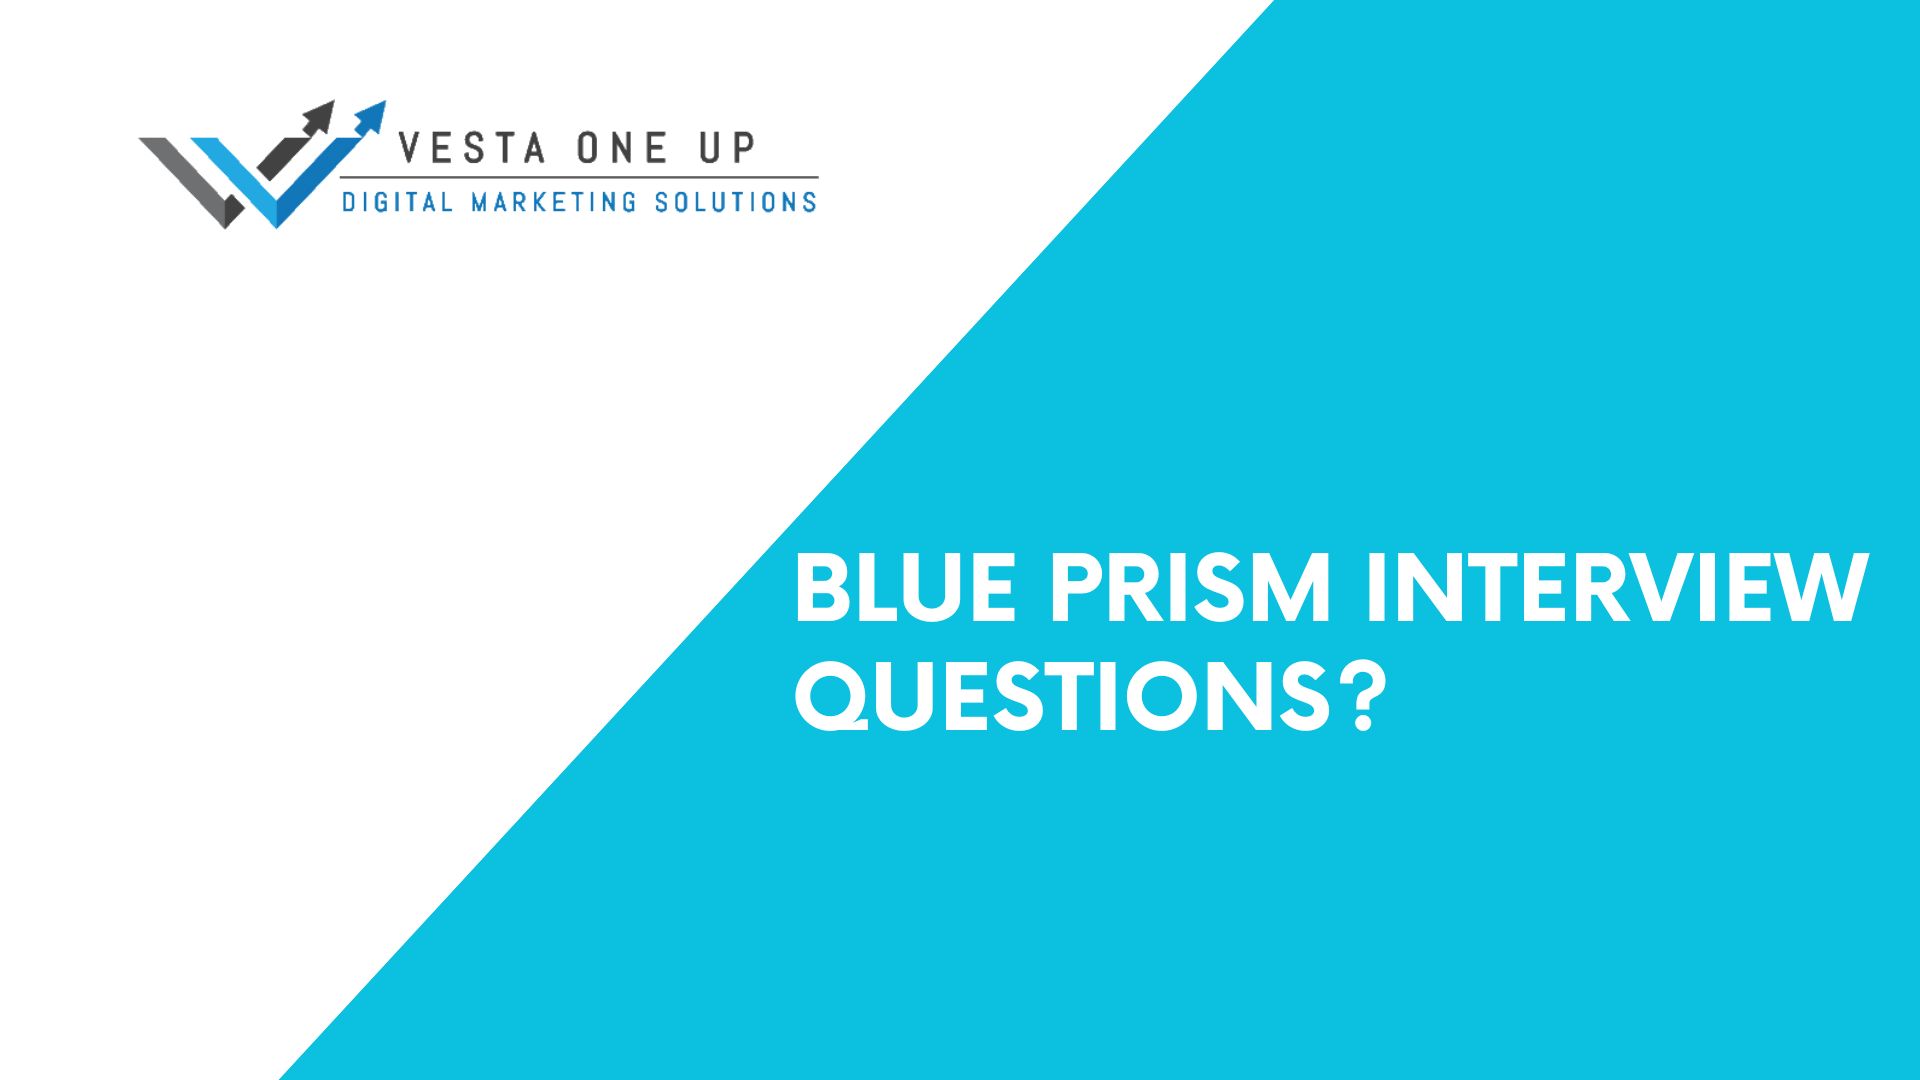 Blue prism interview questions?